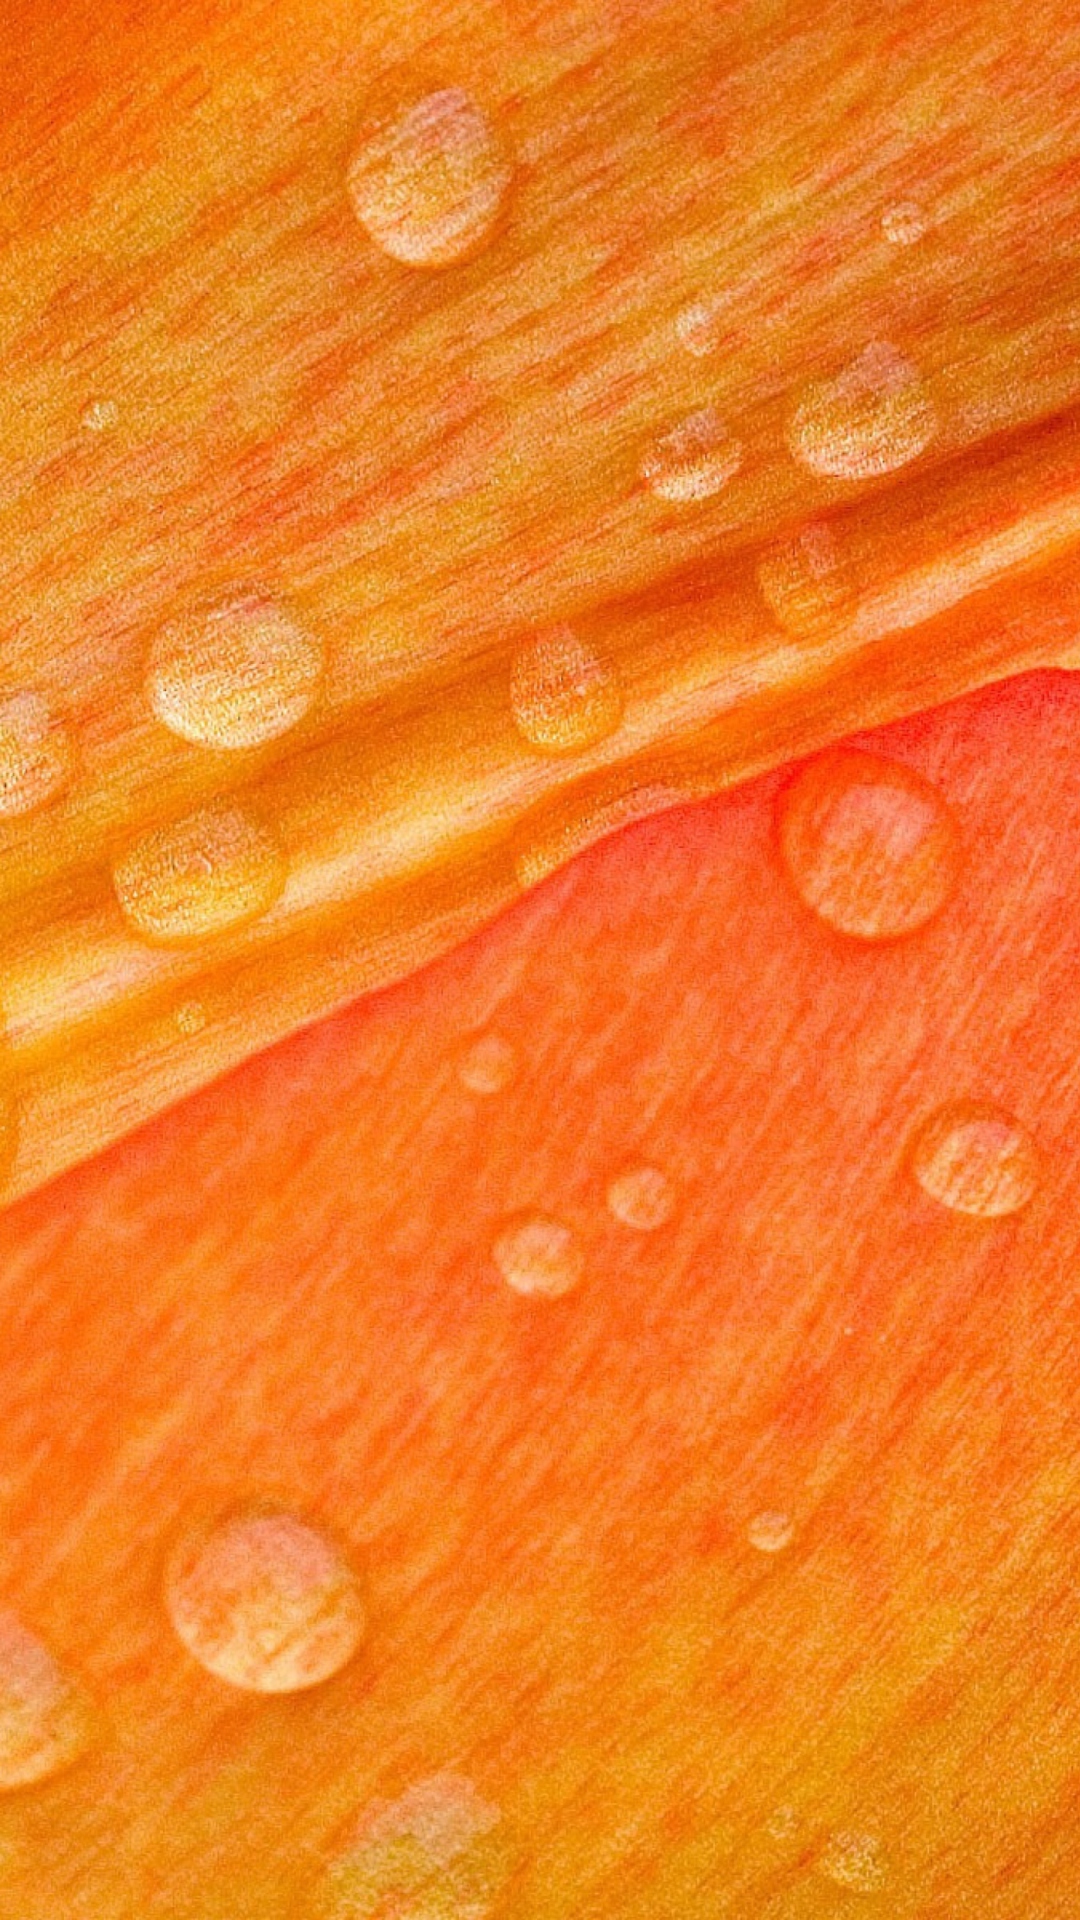 Dew Drops On Orange Petal wallpaper 1080x1920